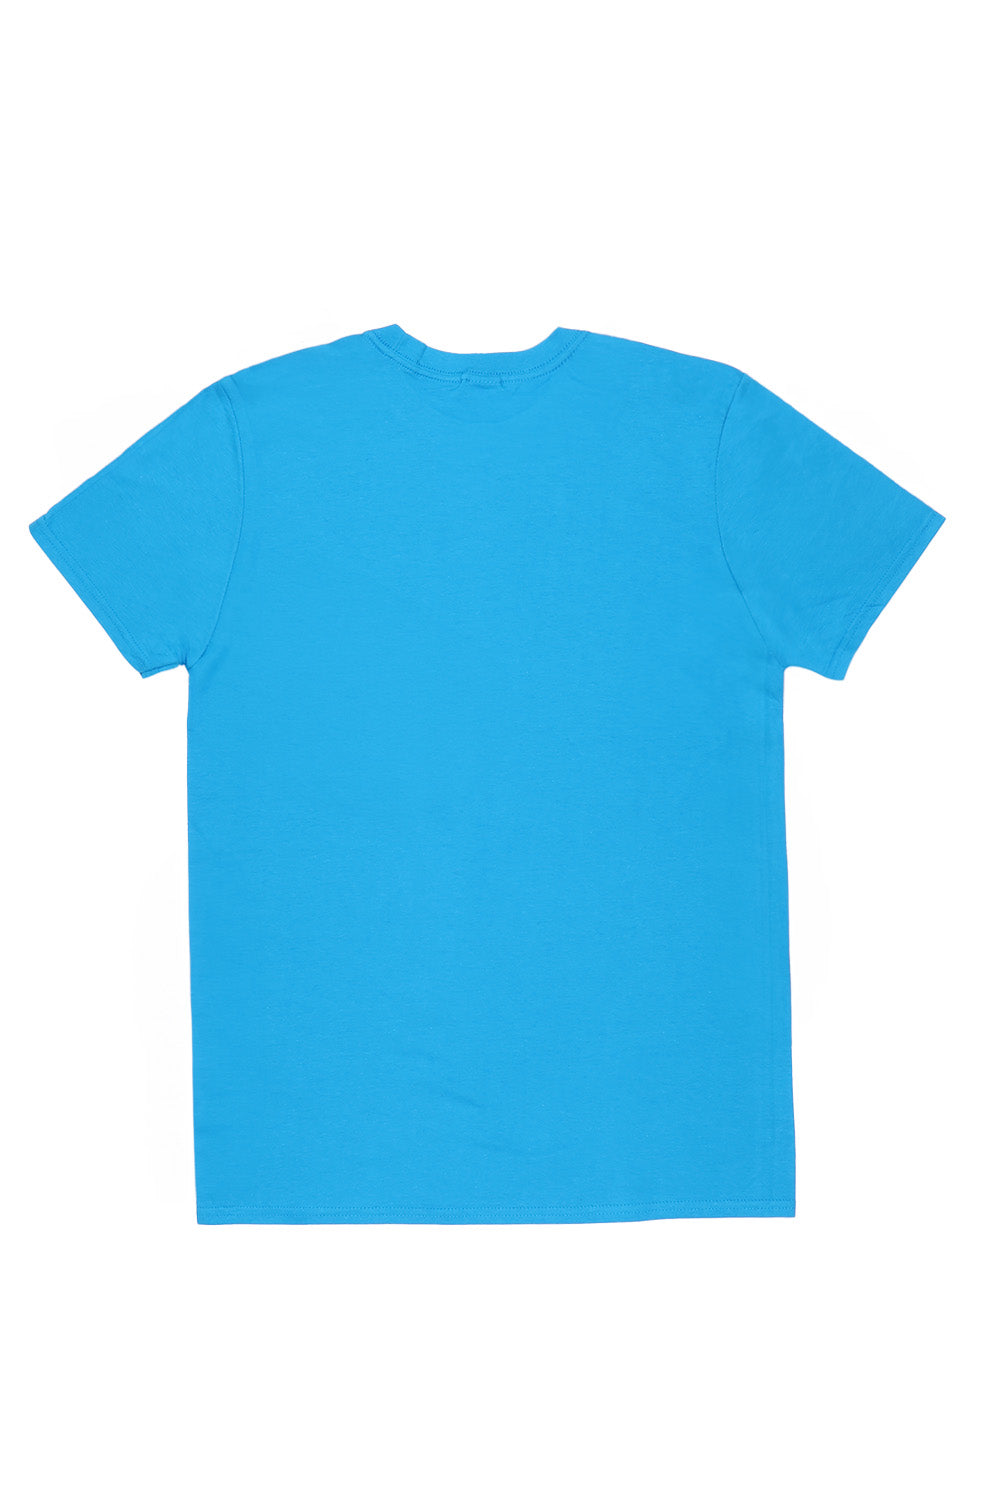 Illinois T-Shirt in Sapphire Blue (Custom Packs)